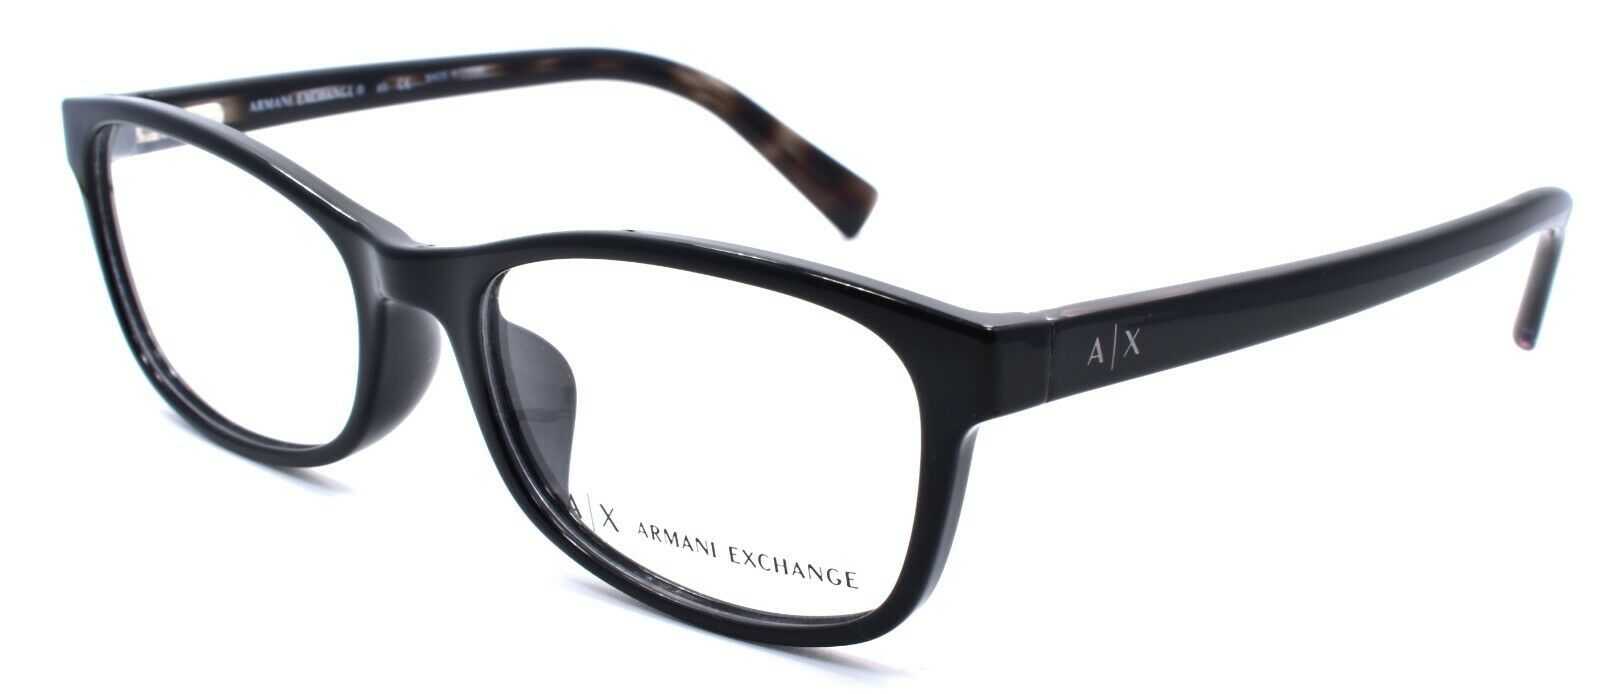 1-Armani Exchange AX3043F 8225 Women's Eyeglasses Frames 55-17-140 Shiny Black-8053672749922-IKSpecs